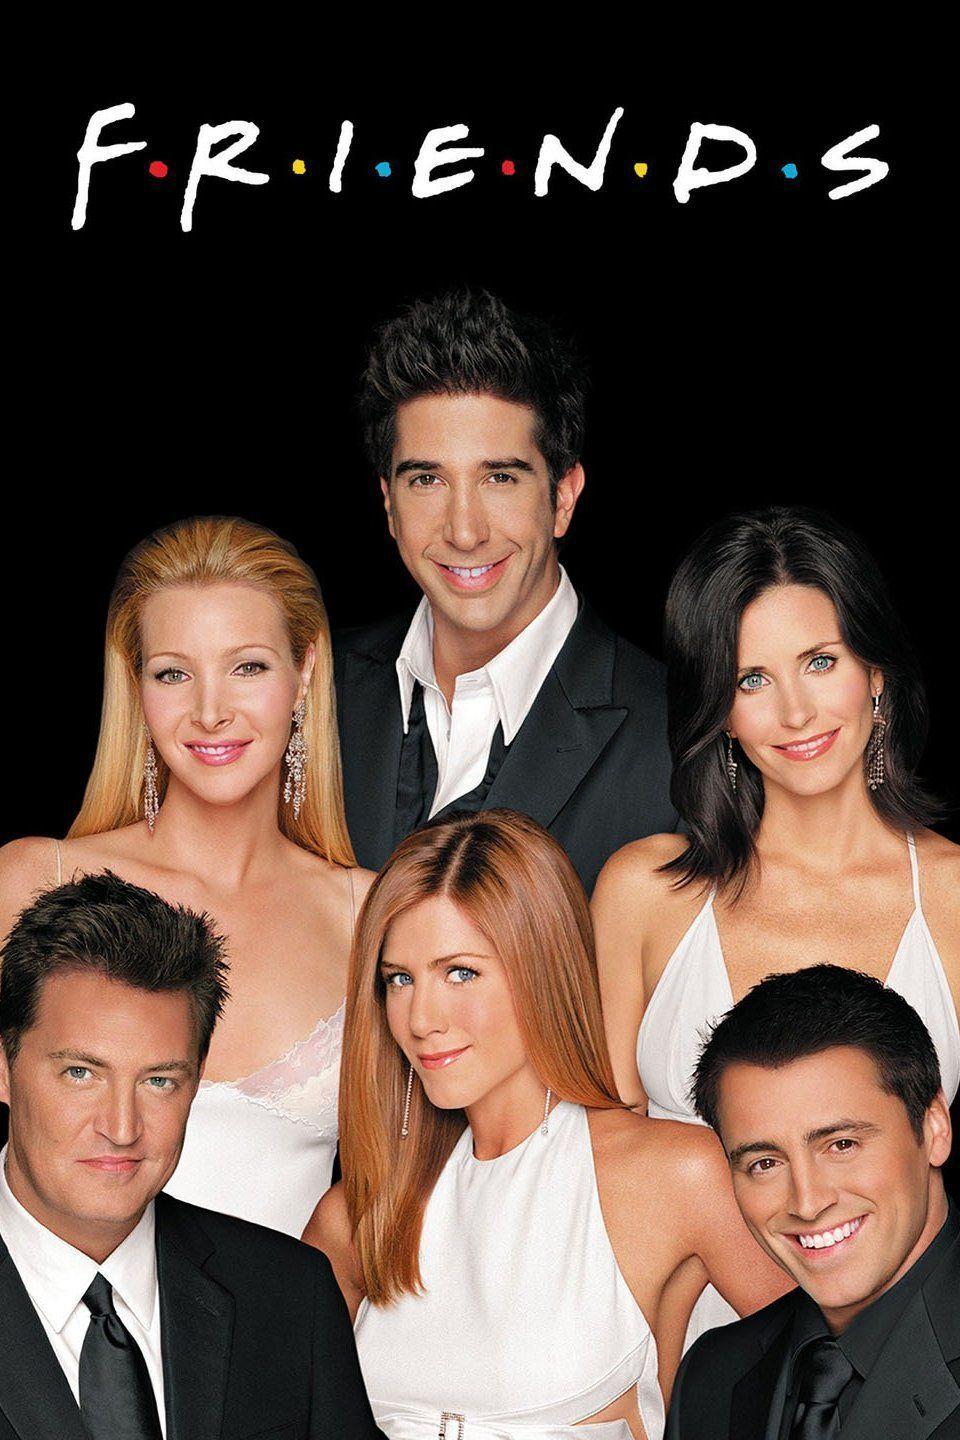 Friends Season 1 10 1080p Hevc. Whenever I'm Upset Watch